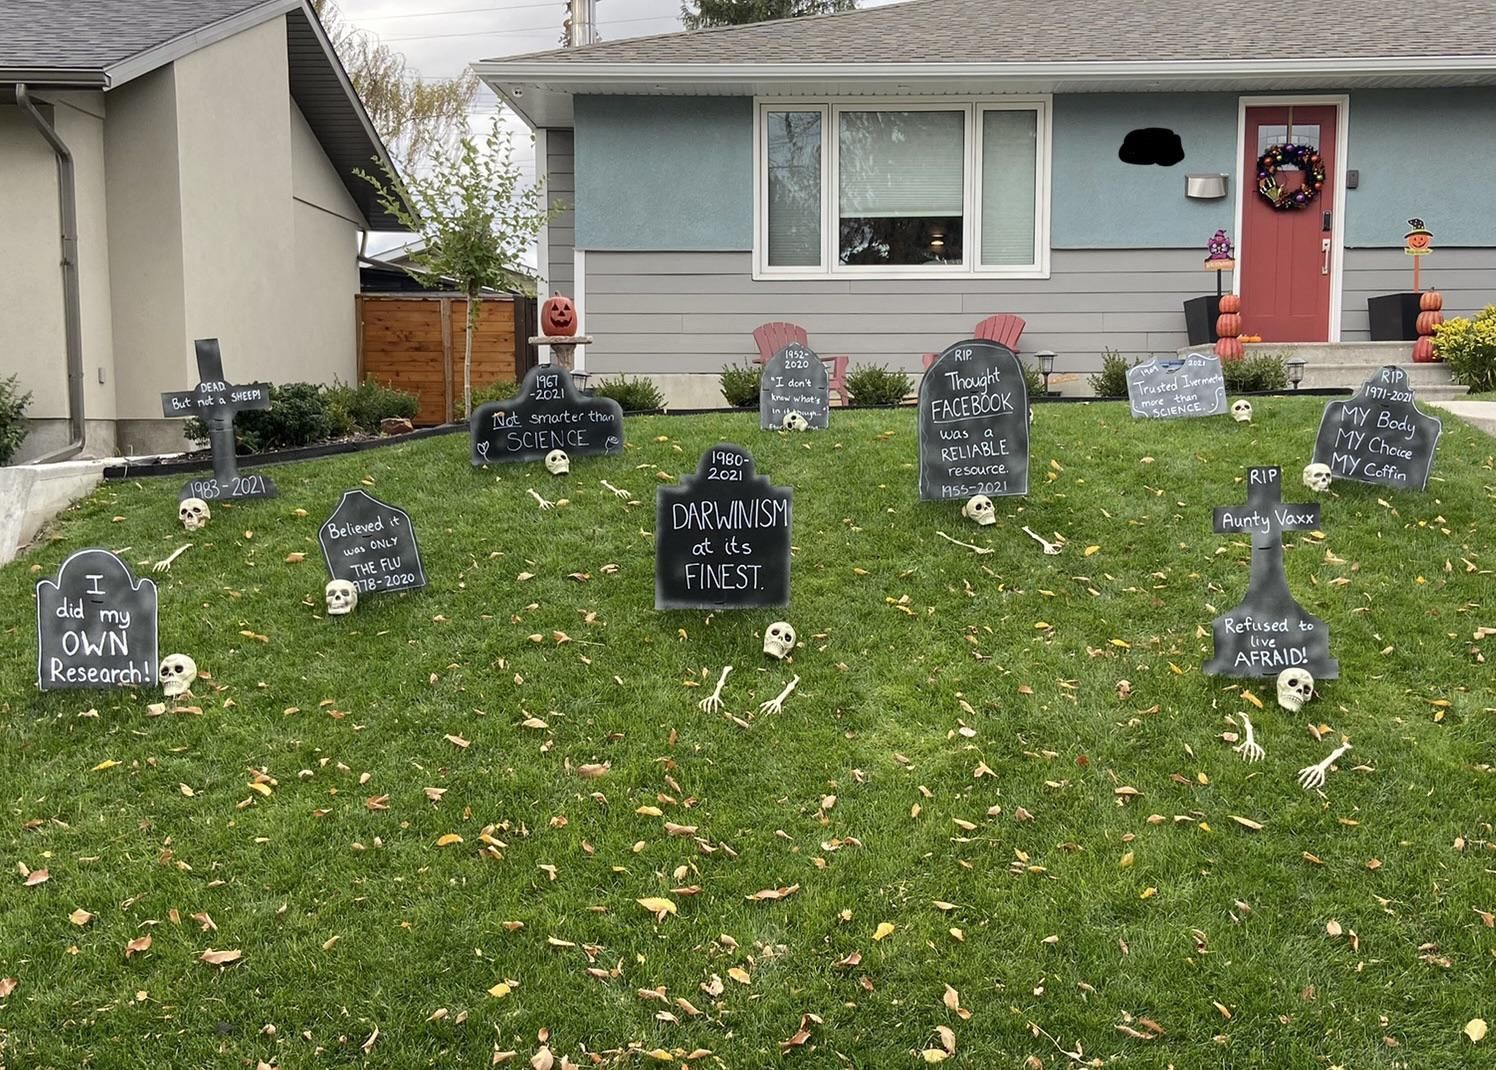 My neighbour’s Halloween decor had me rolling